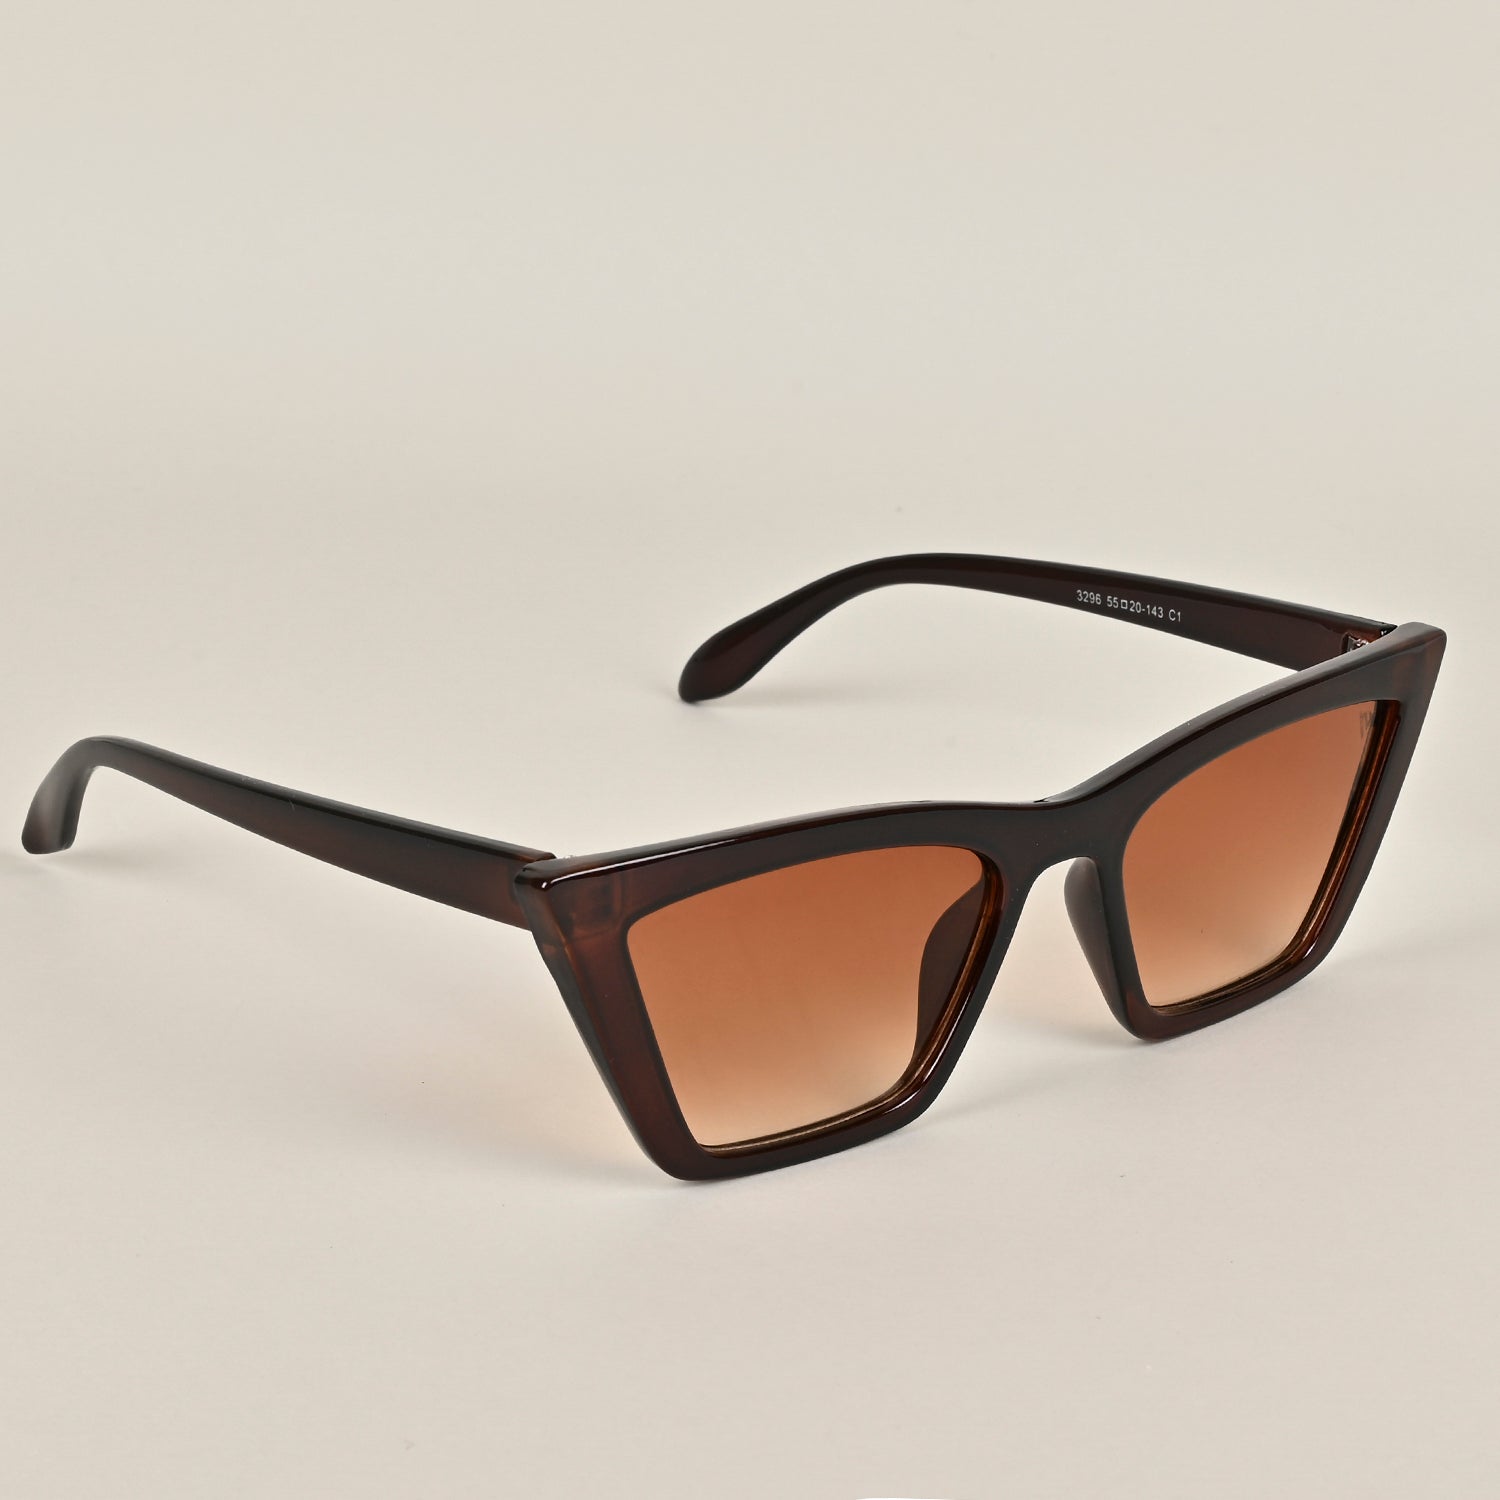 Voyage Brown Cateye Sunglasses MG3296